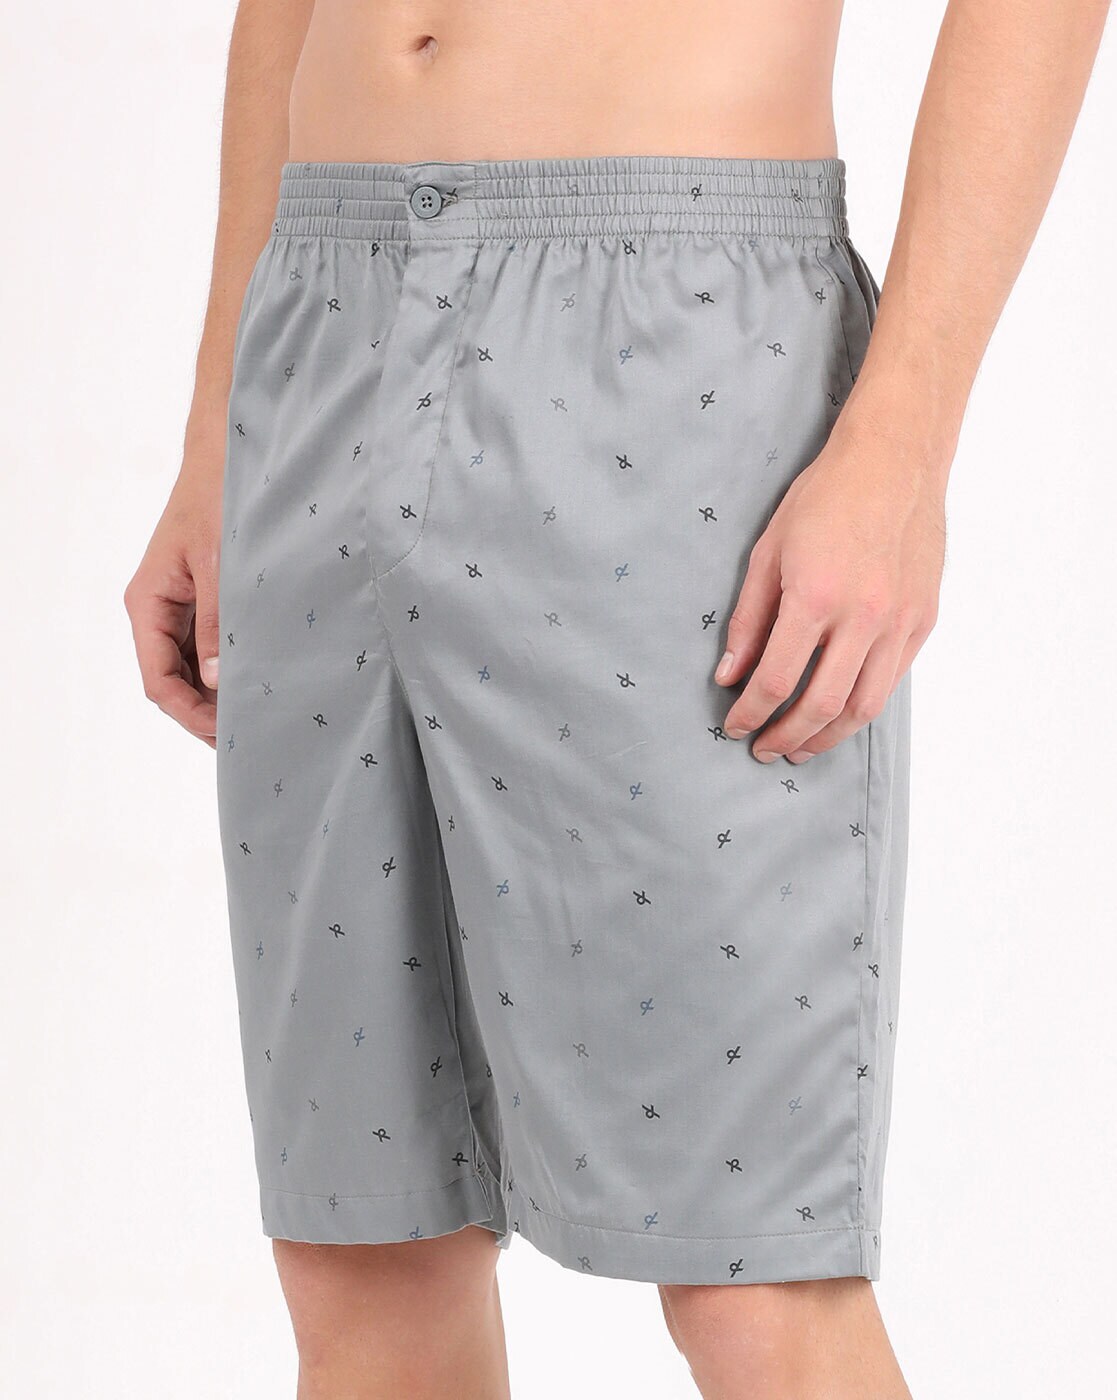 Buy Grey Shorts for Men by JOCKEY Online